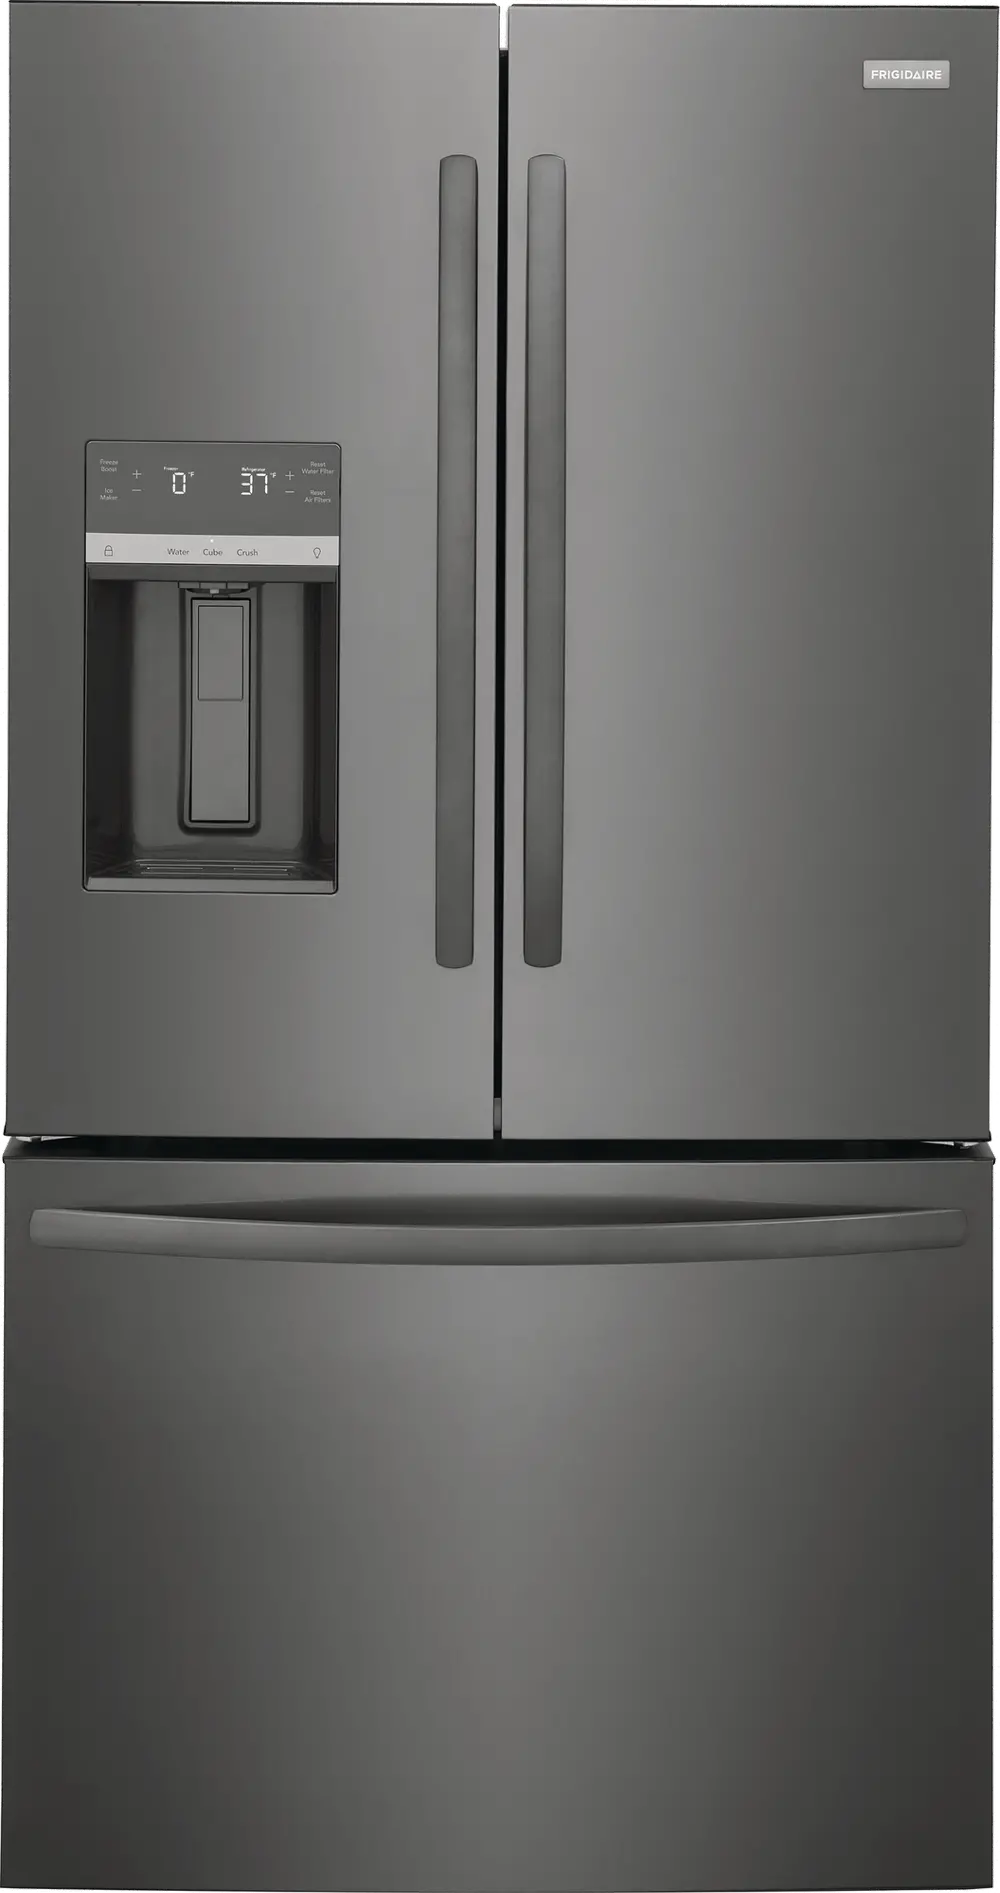 FRFS2823AD Frigidaire 27.8 cu ft French Door Refrigerator - Black Stainless Steel-1